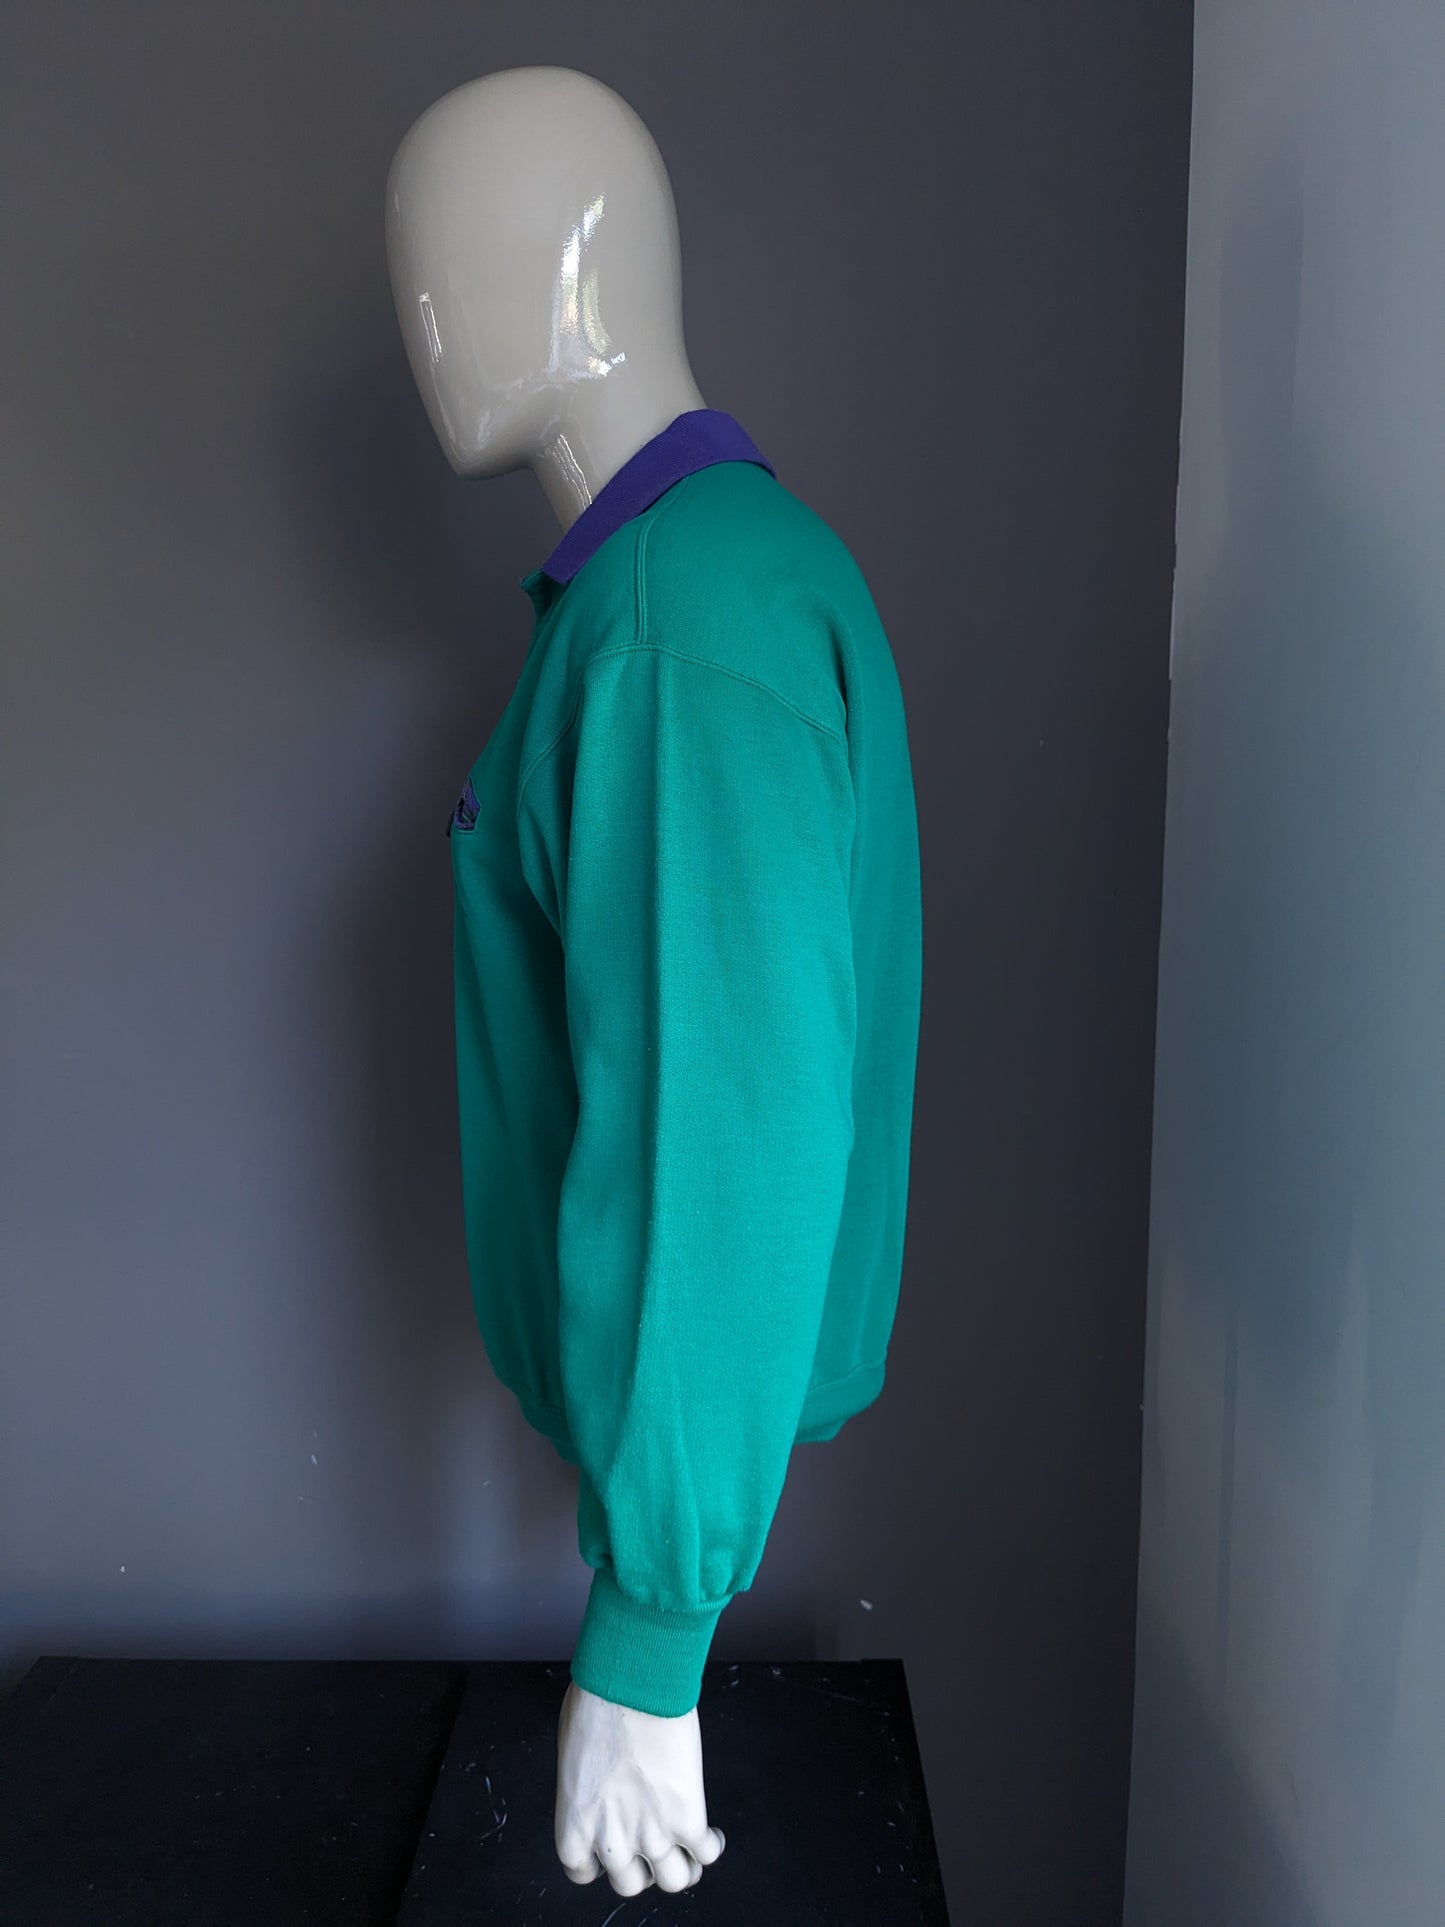 Vintage Sergio Tacchini Polo -Pullover mit Gummiband. Grün lila gefärbt. Größe xl.